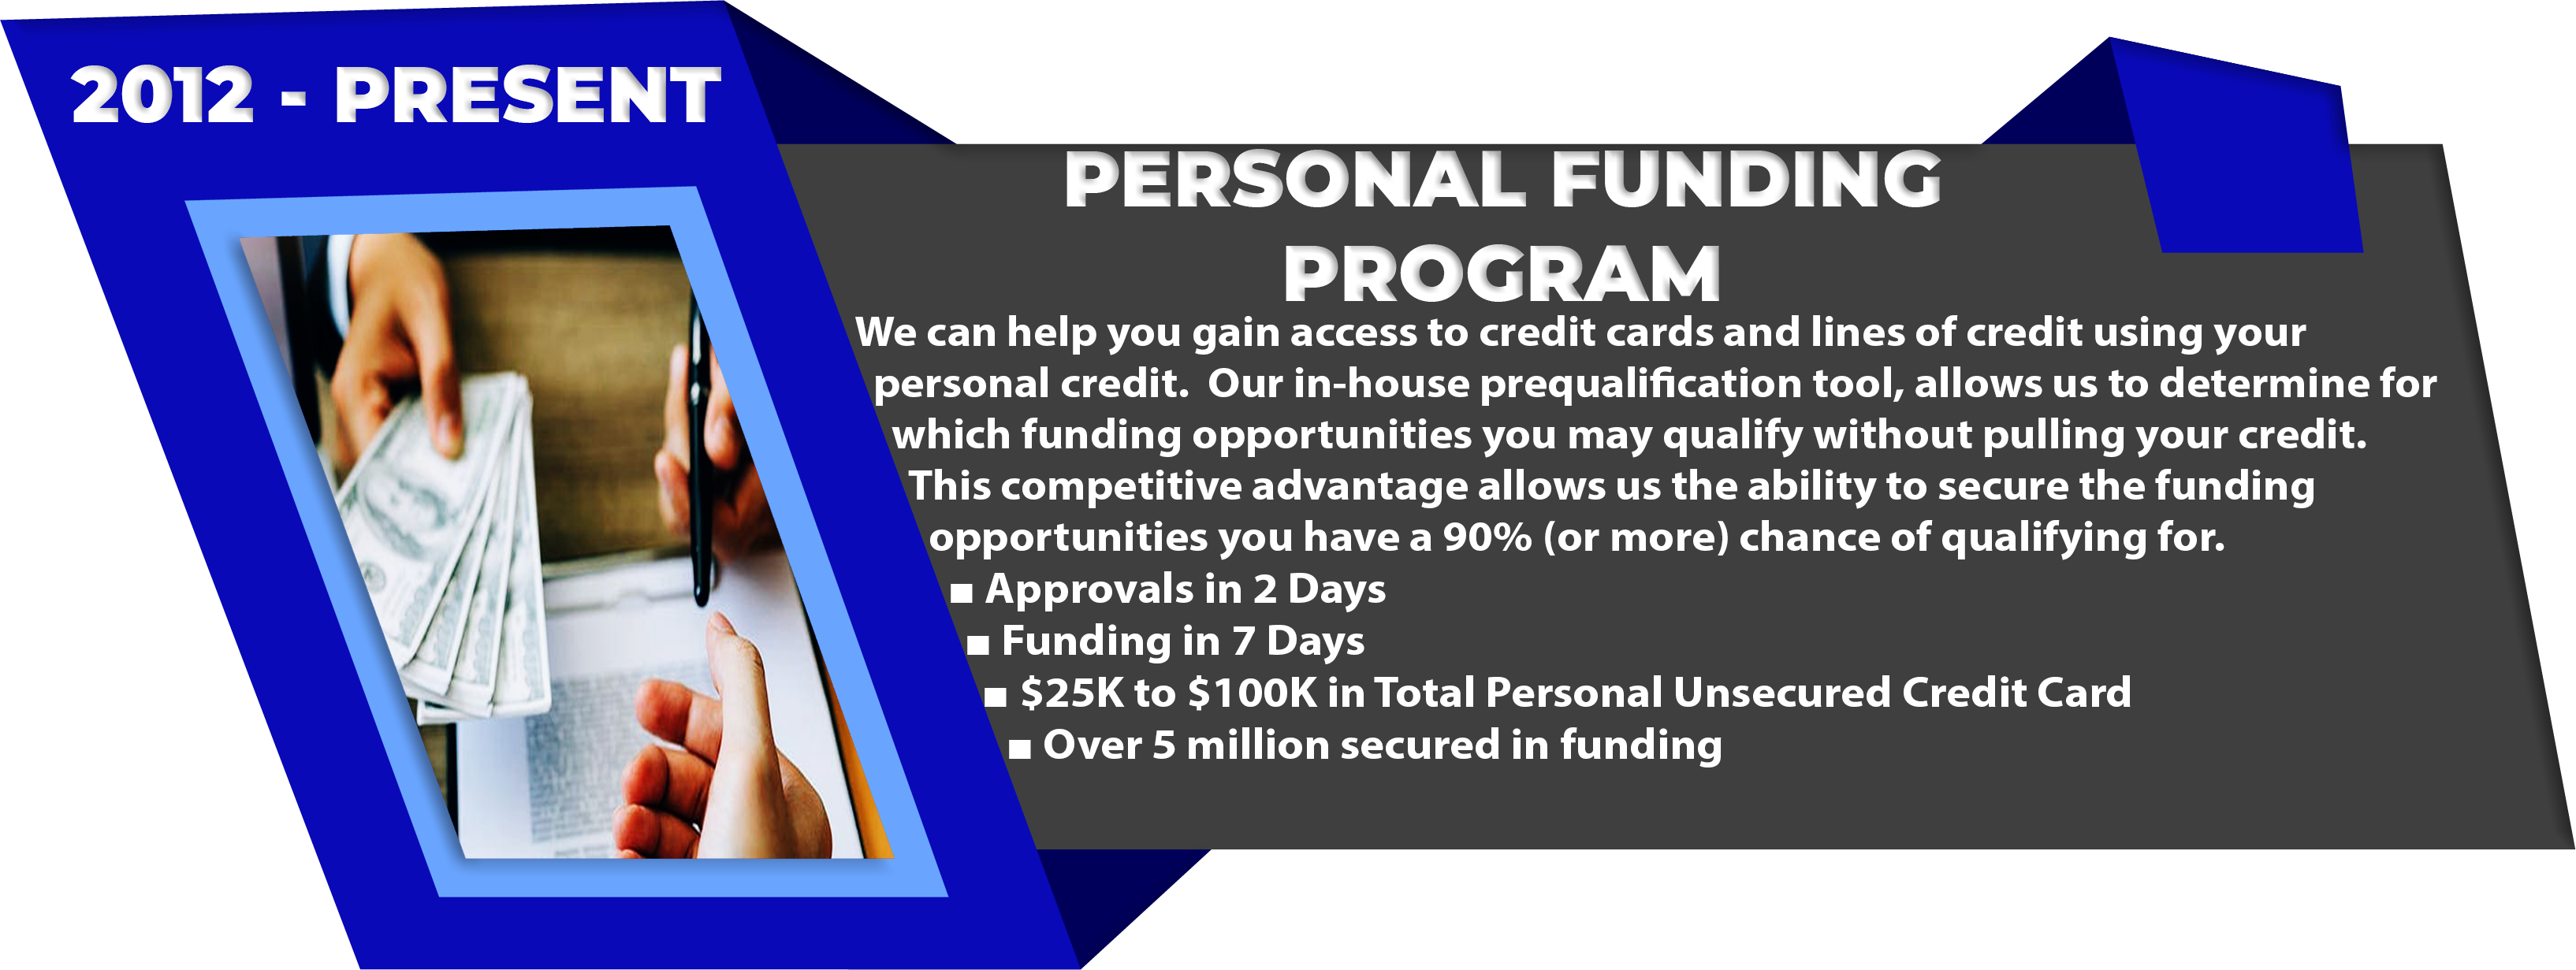 Personal-Funding-Program-2012-Present-1